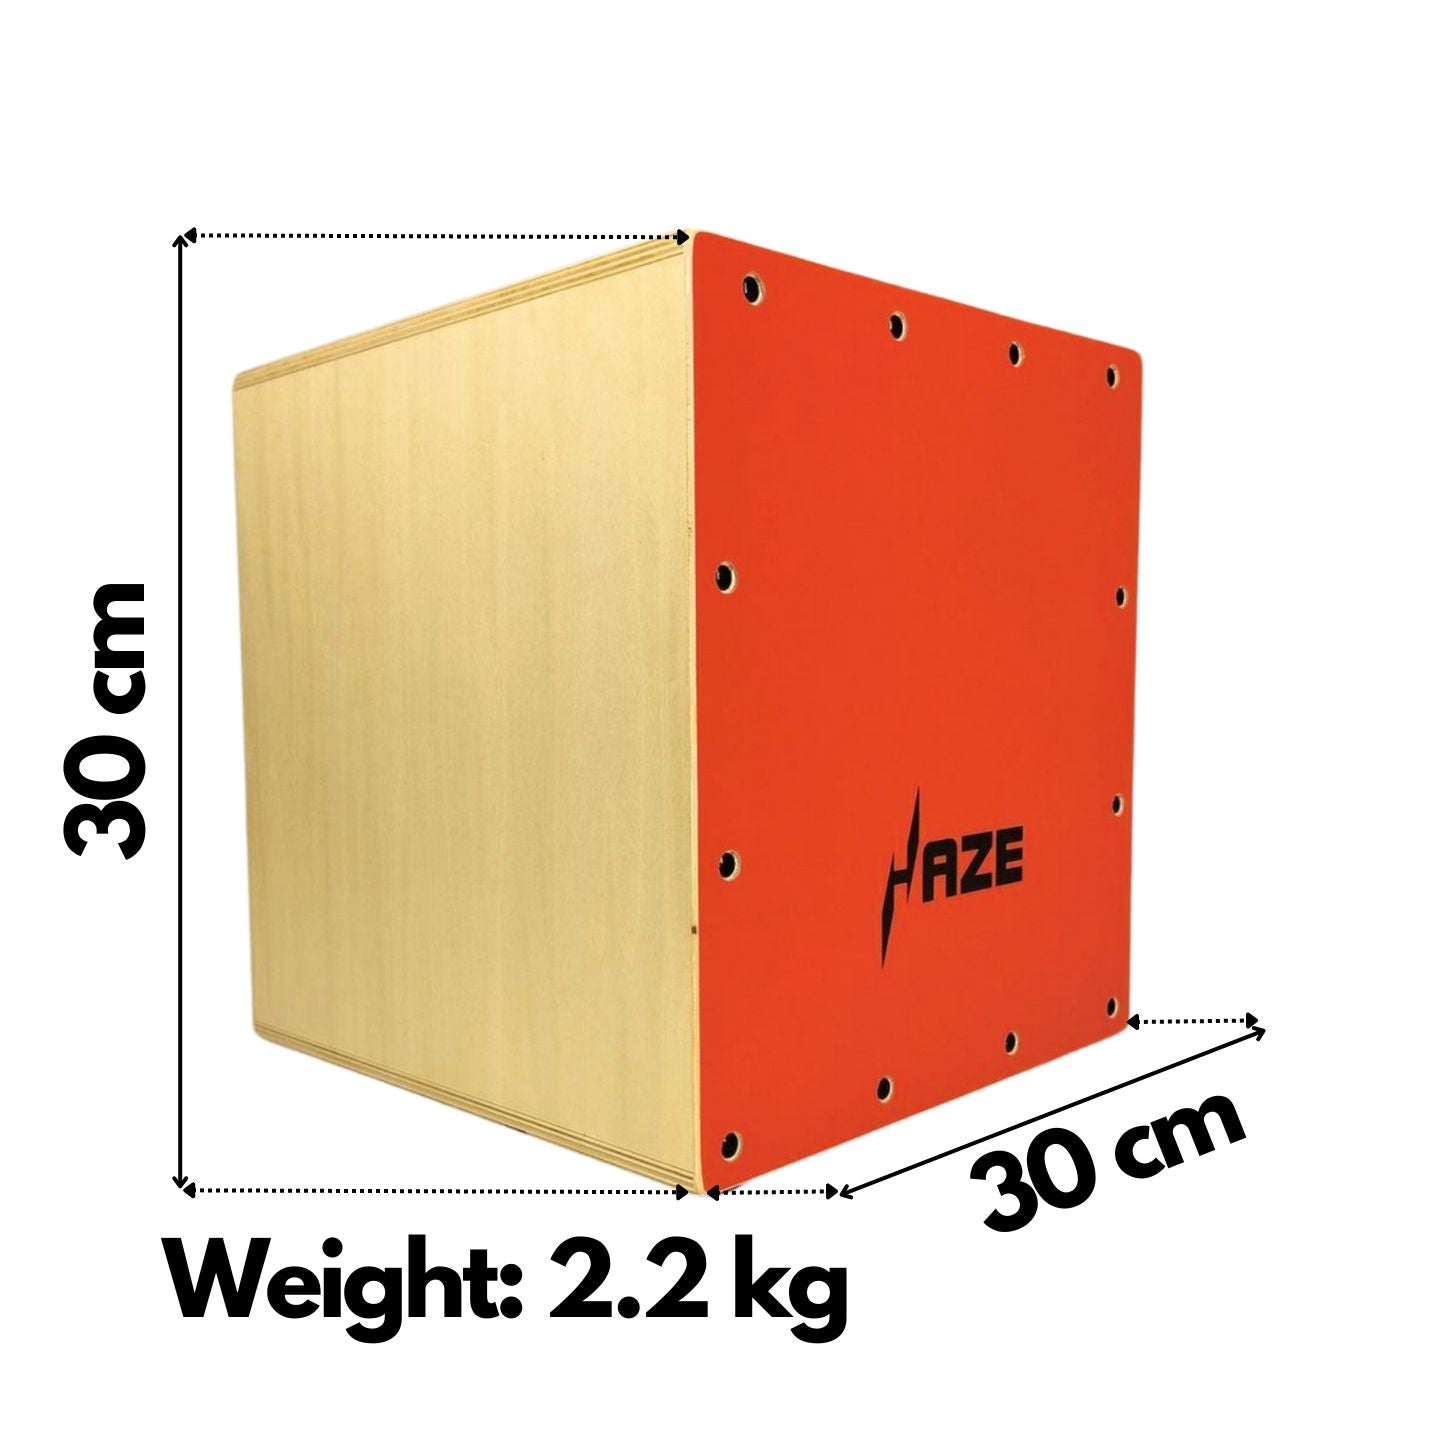 Haze Mini Cajon - Orange WS22